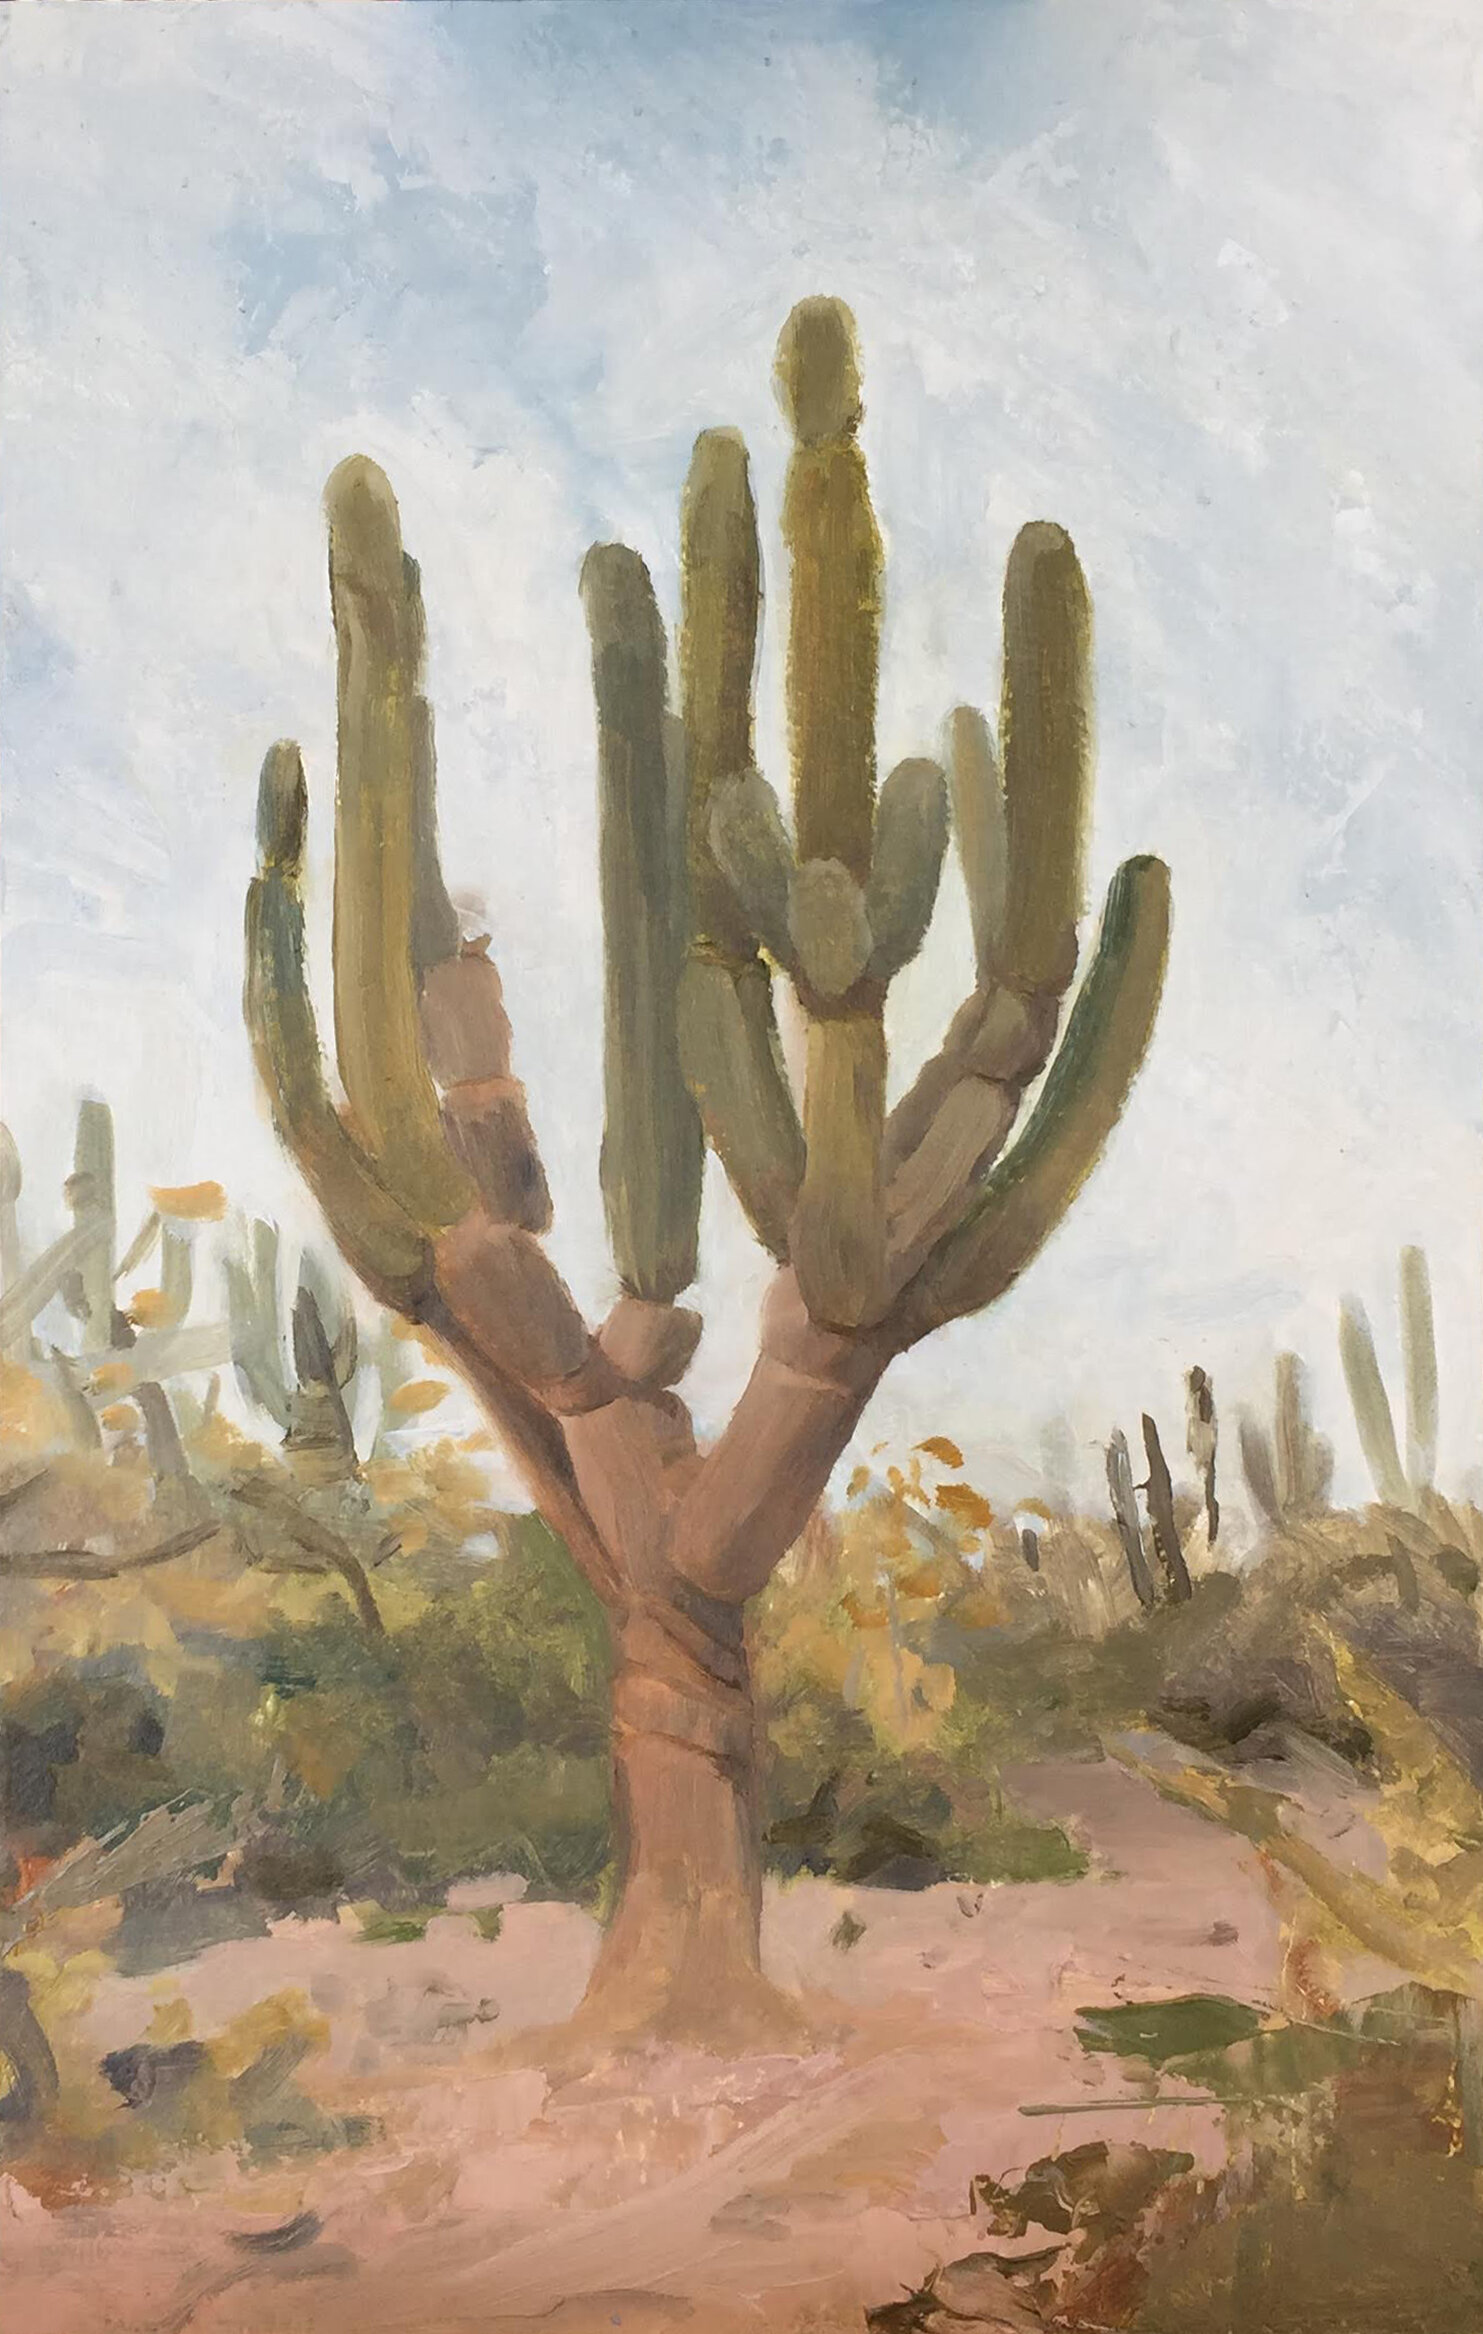 Cardon Cactus, 2019